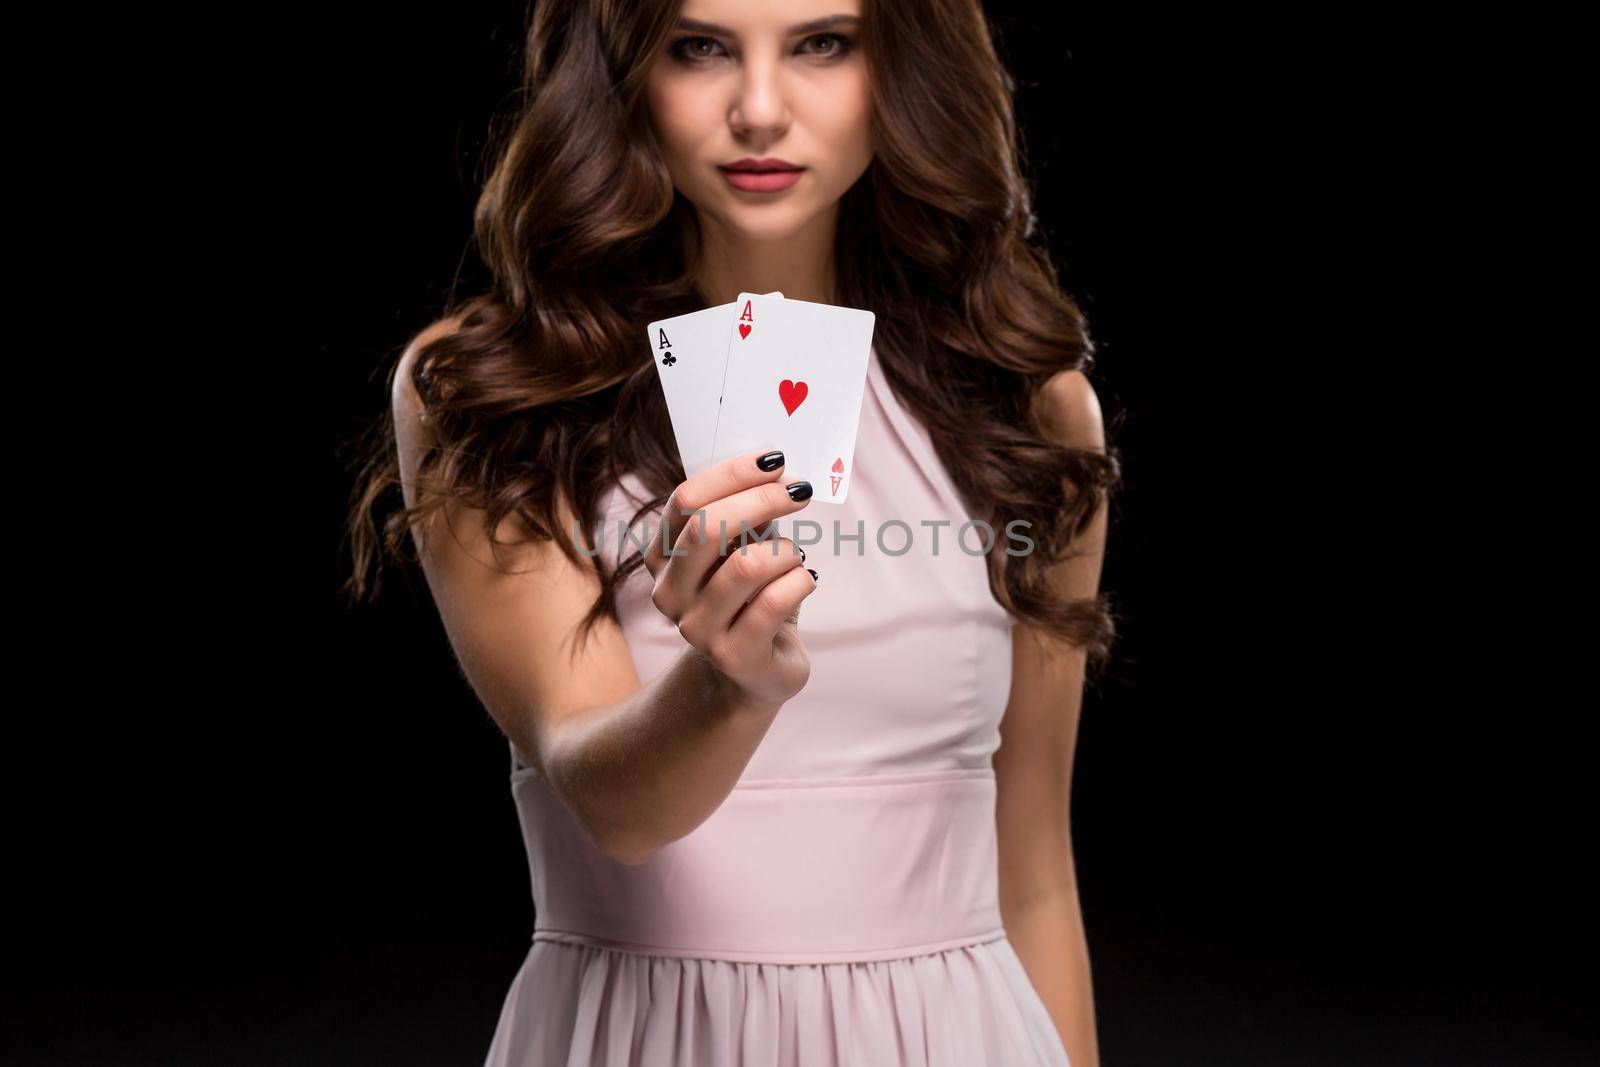 Sexy brunette woman holding aces winning hand on a black background by nazarovsergey